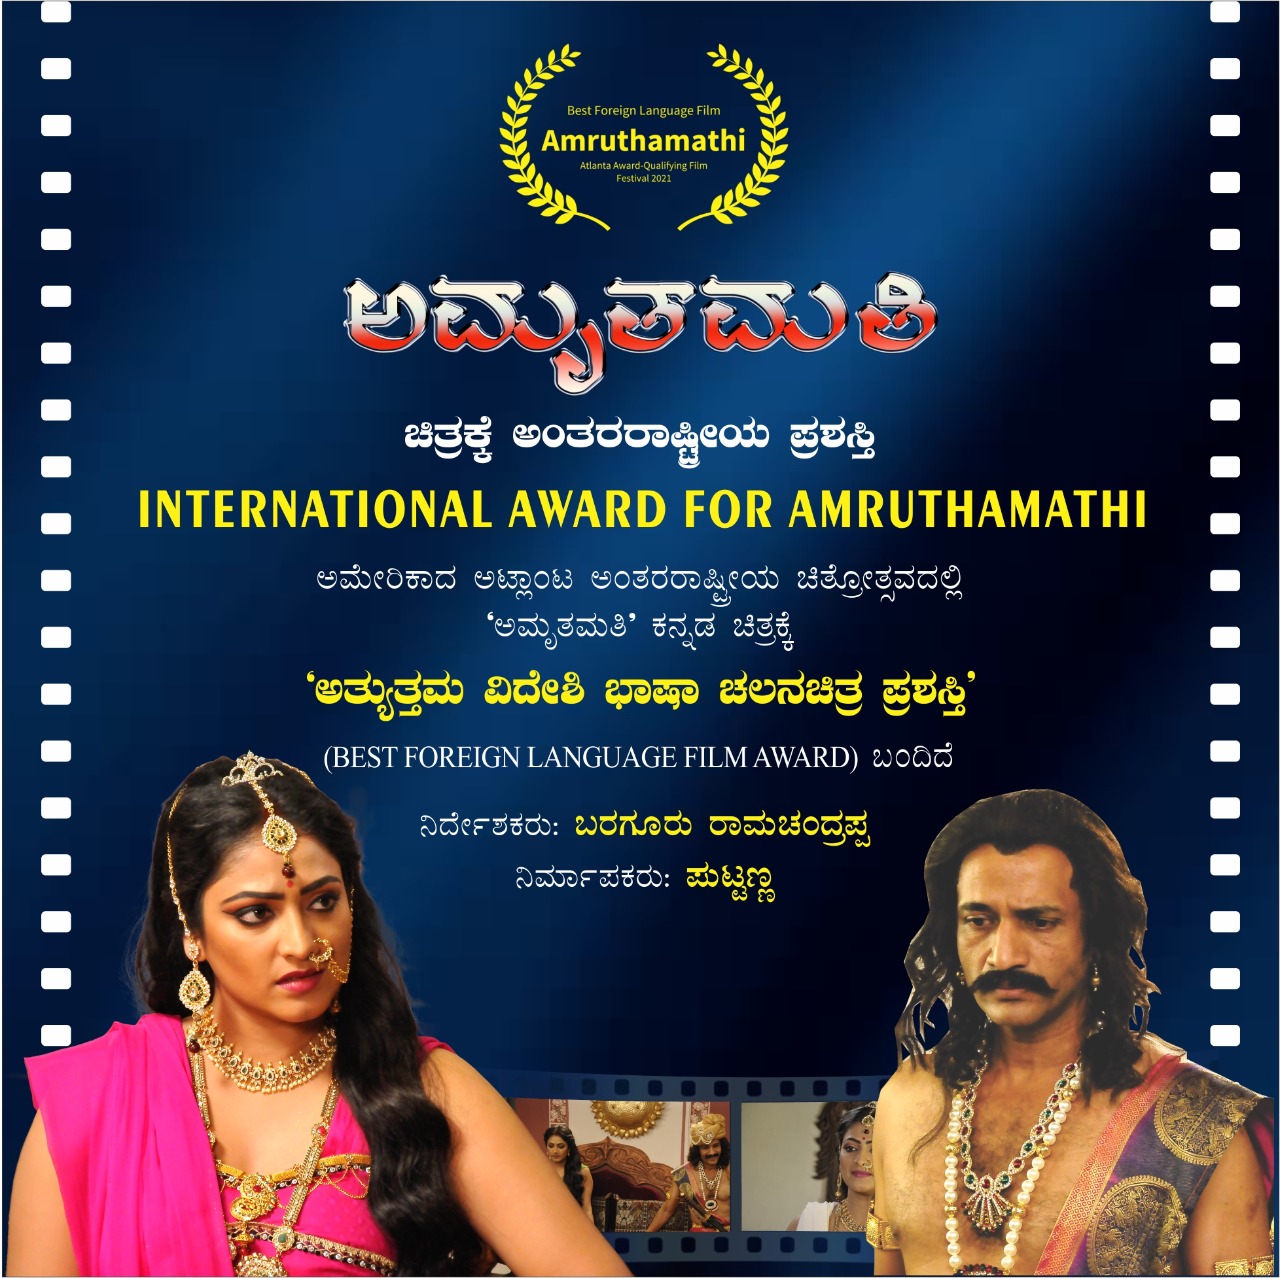 Best Foreign Language Film Award for amritamati movie